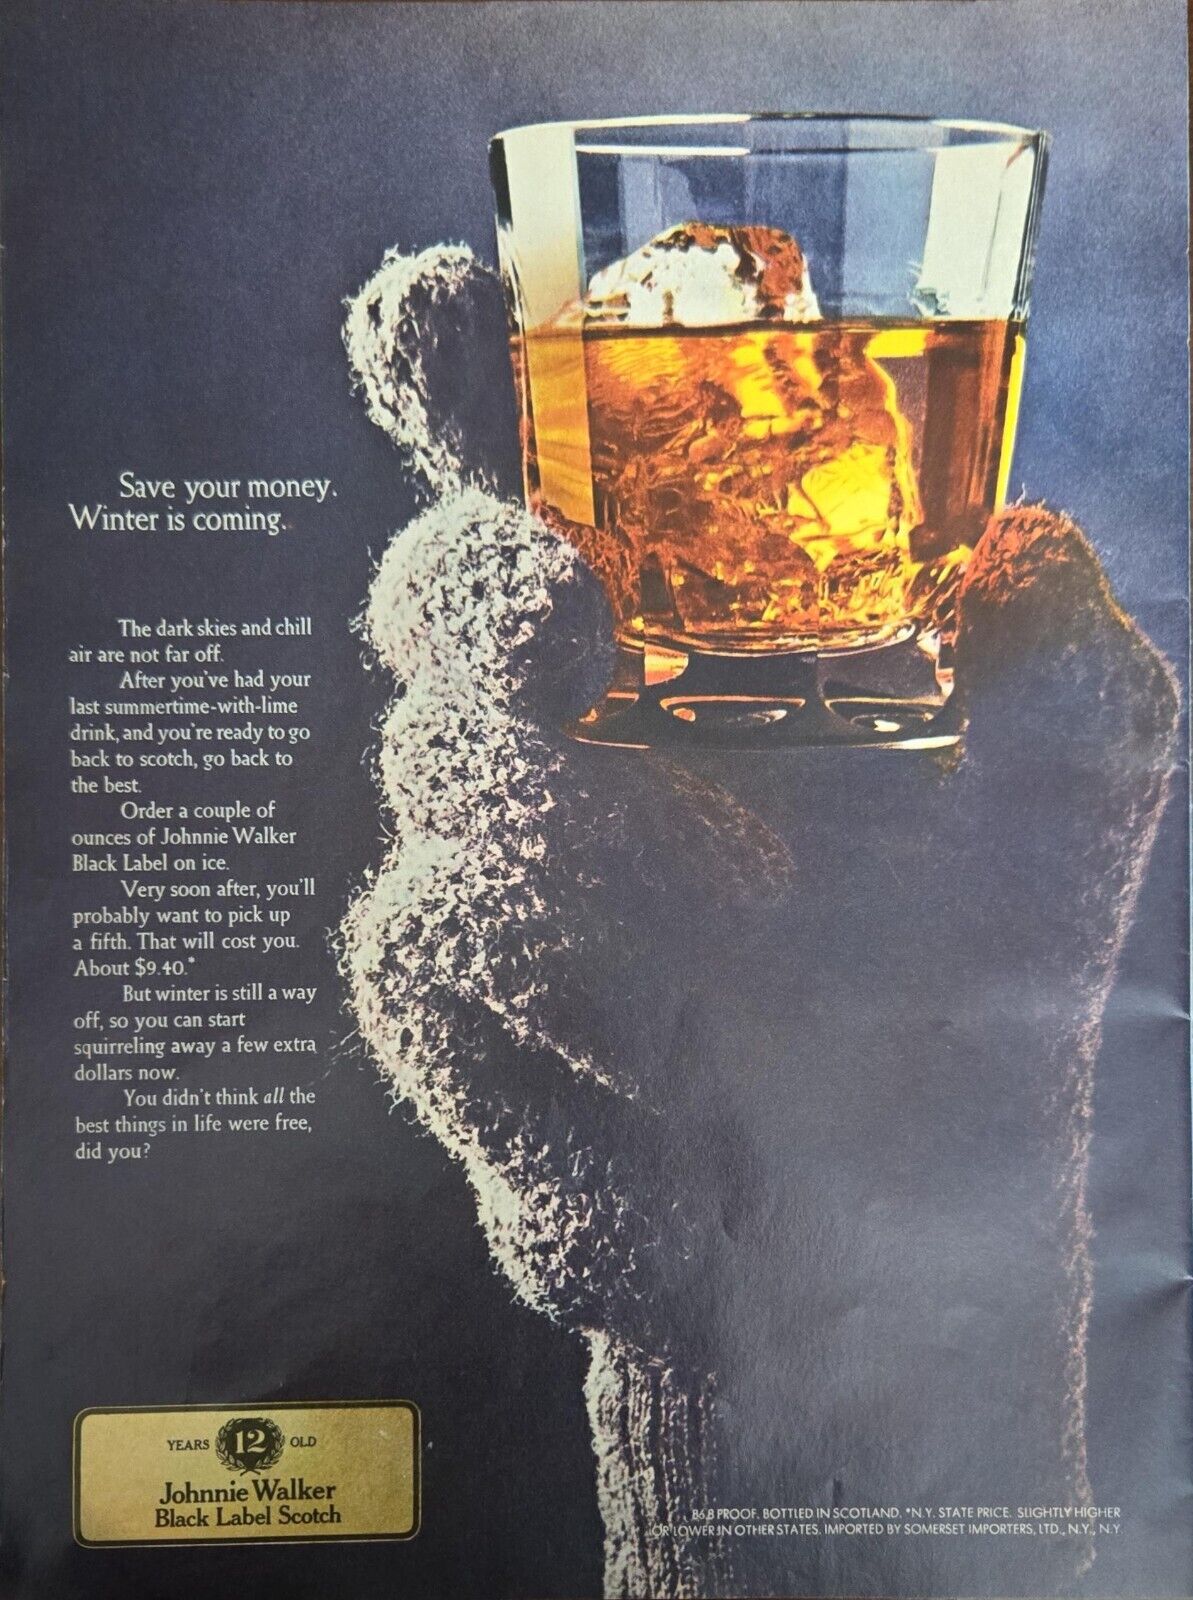 1969 JOHNNIE WALKER Black Label Scotch Magazine Ad - Winter Is Coming